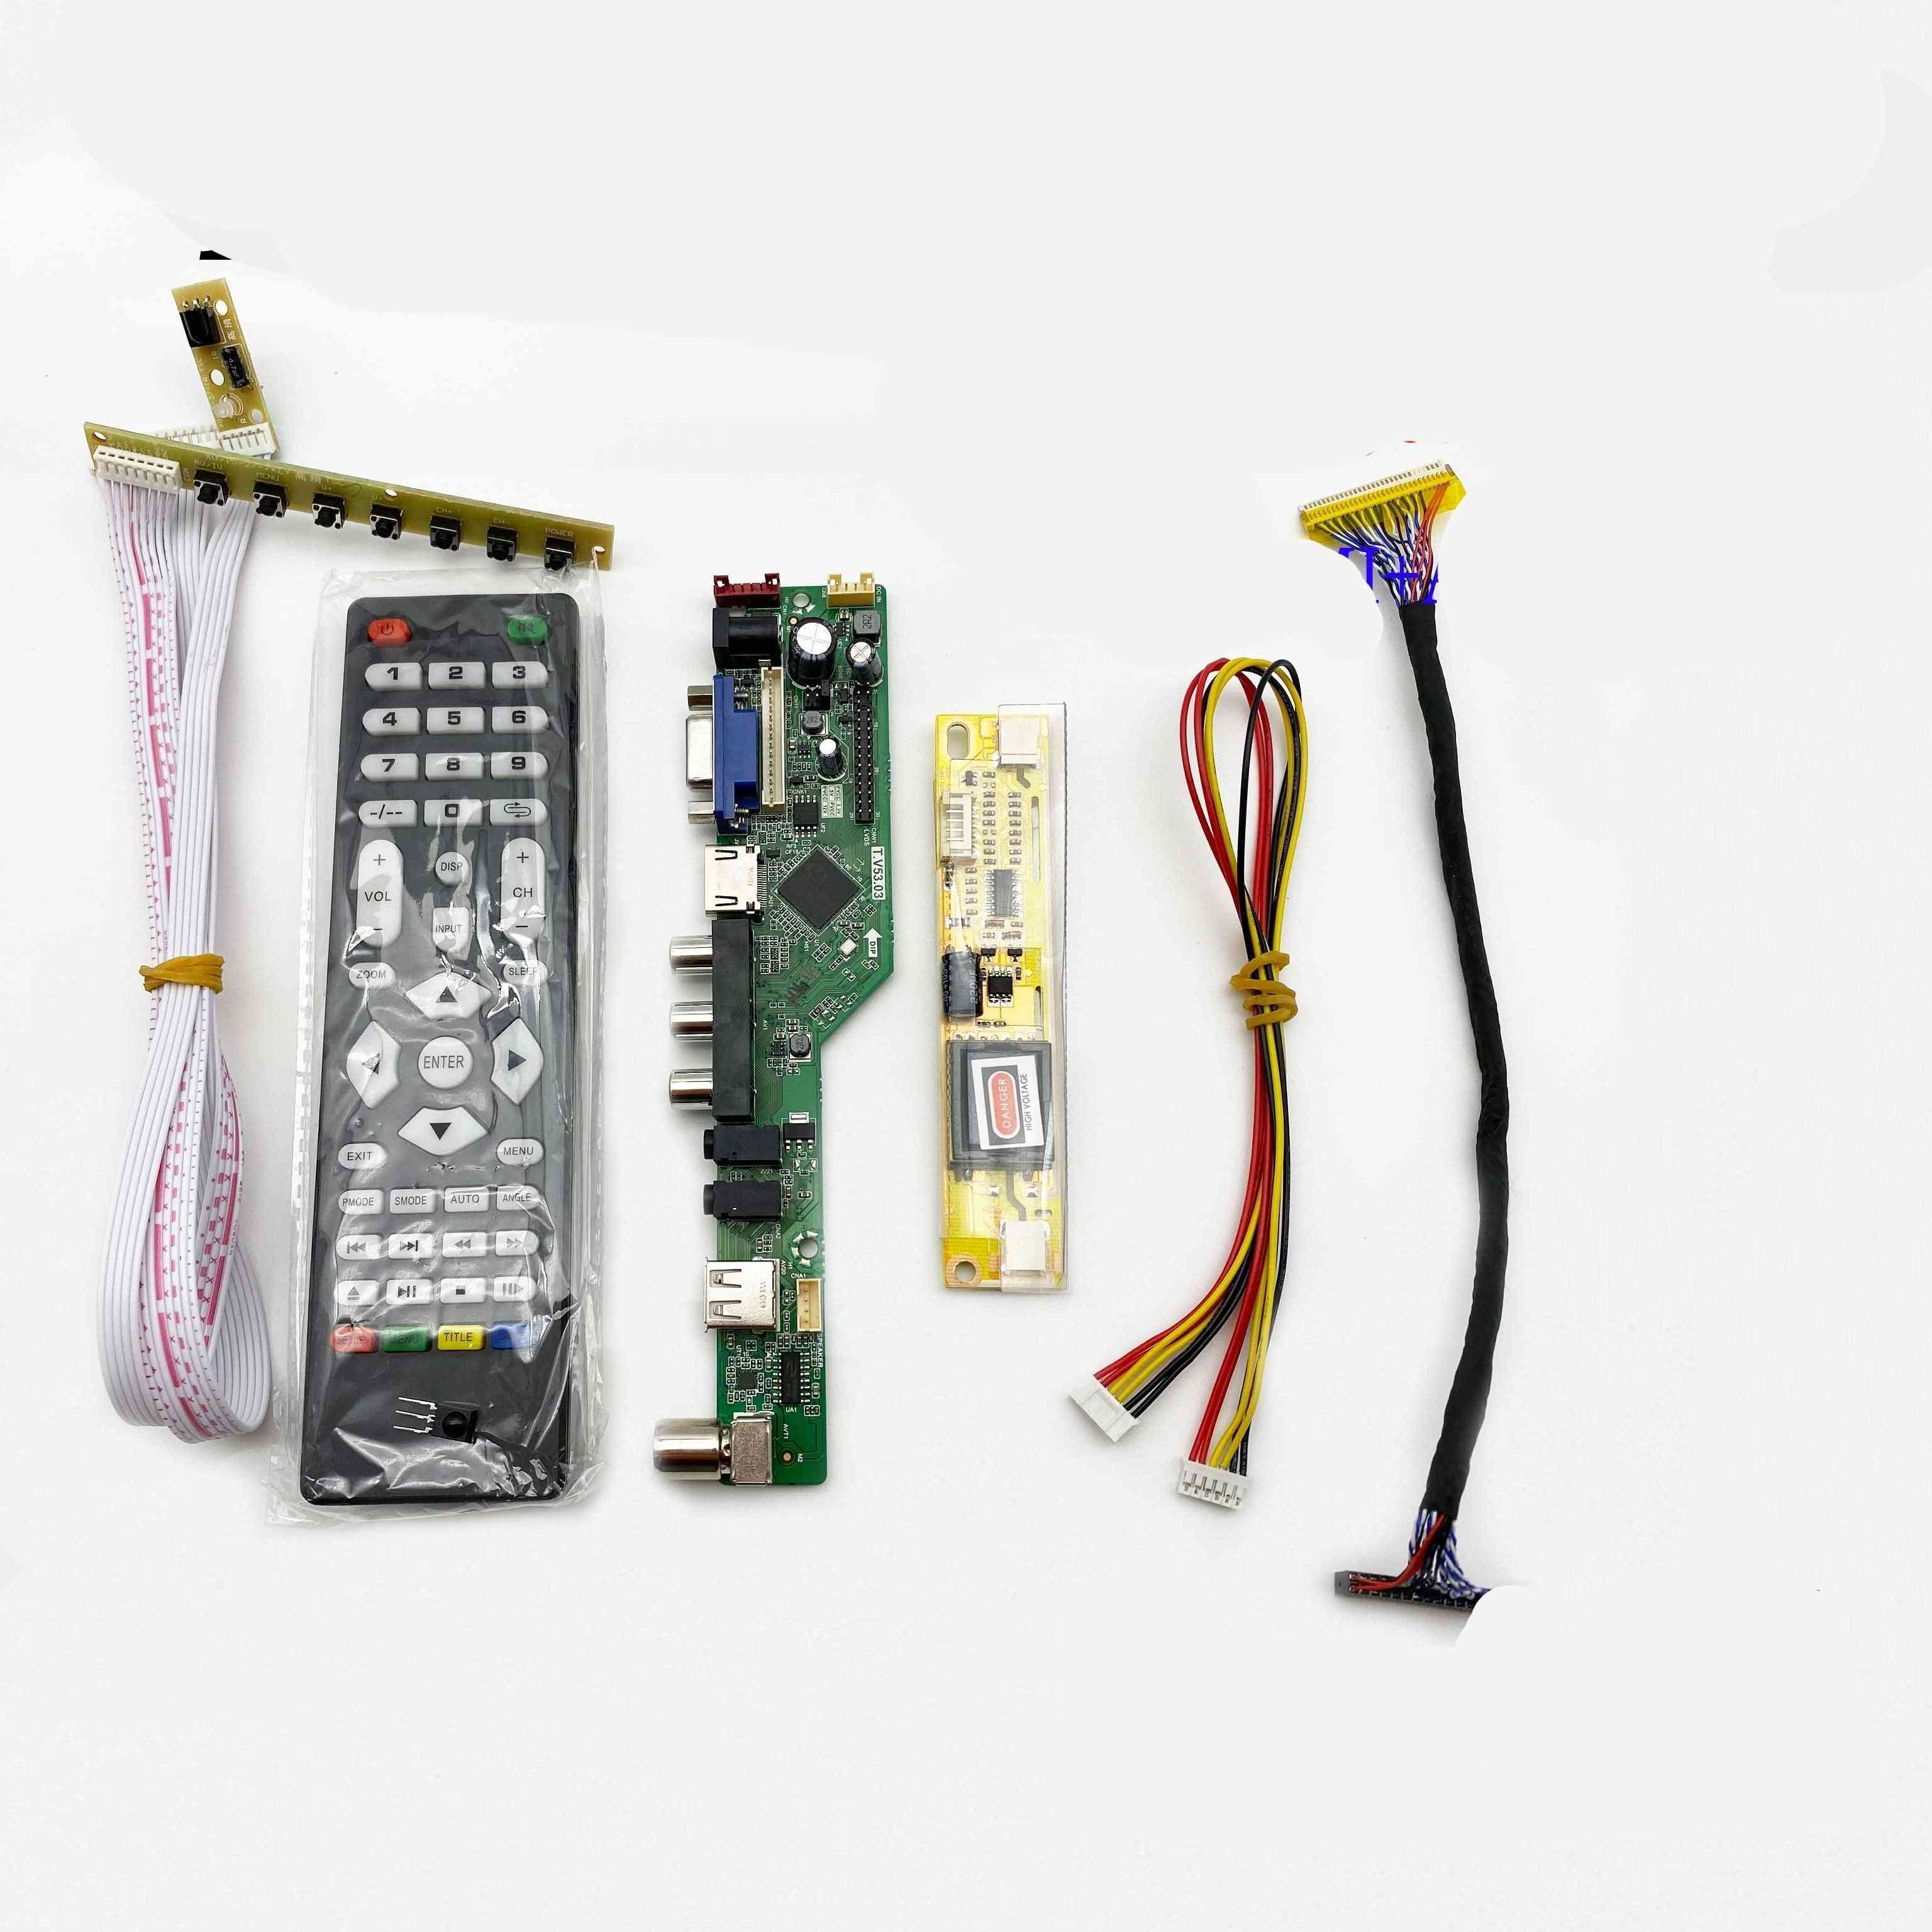 Univerzalna ploča upravljačkog programa za LCD televizor, pc / vga / hdmi / usb sučelje + 7 tipkovnica + 2 pretvarača žarulje